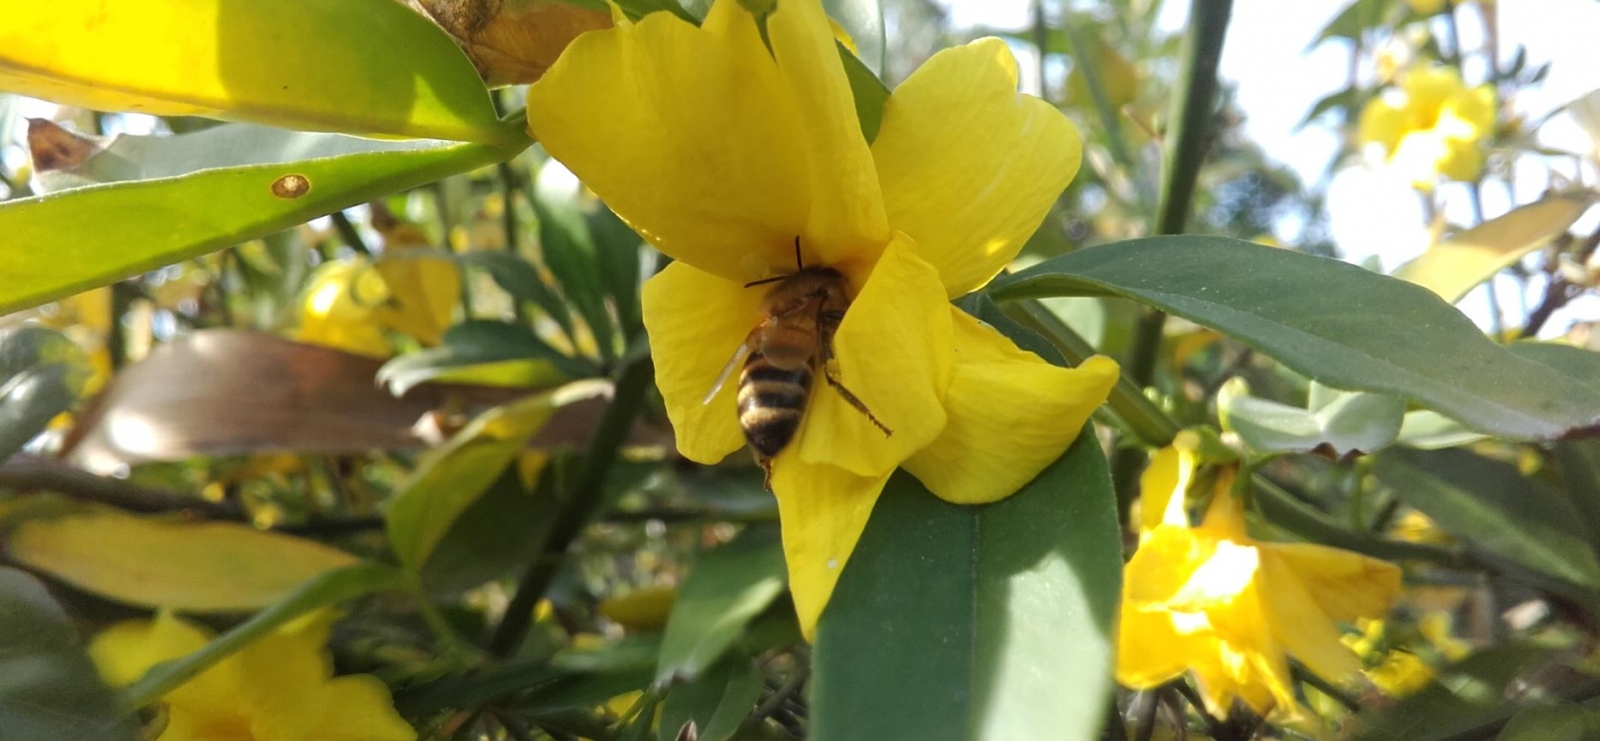 Nos amies les abeilles